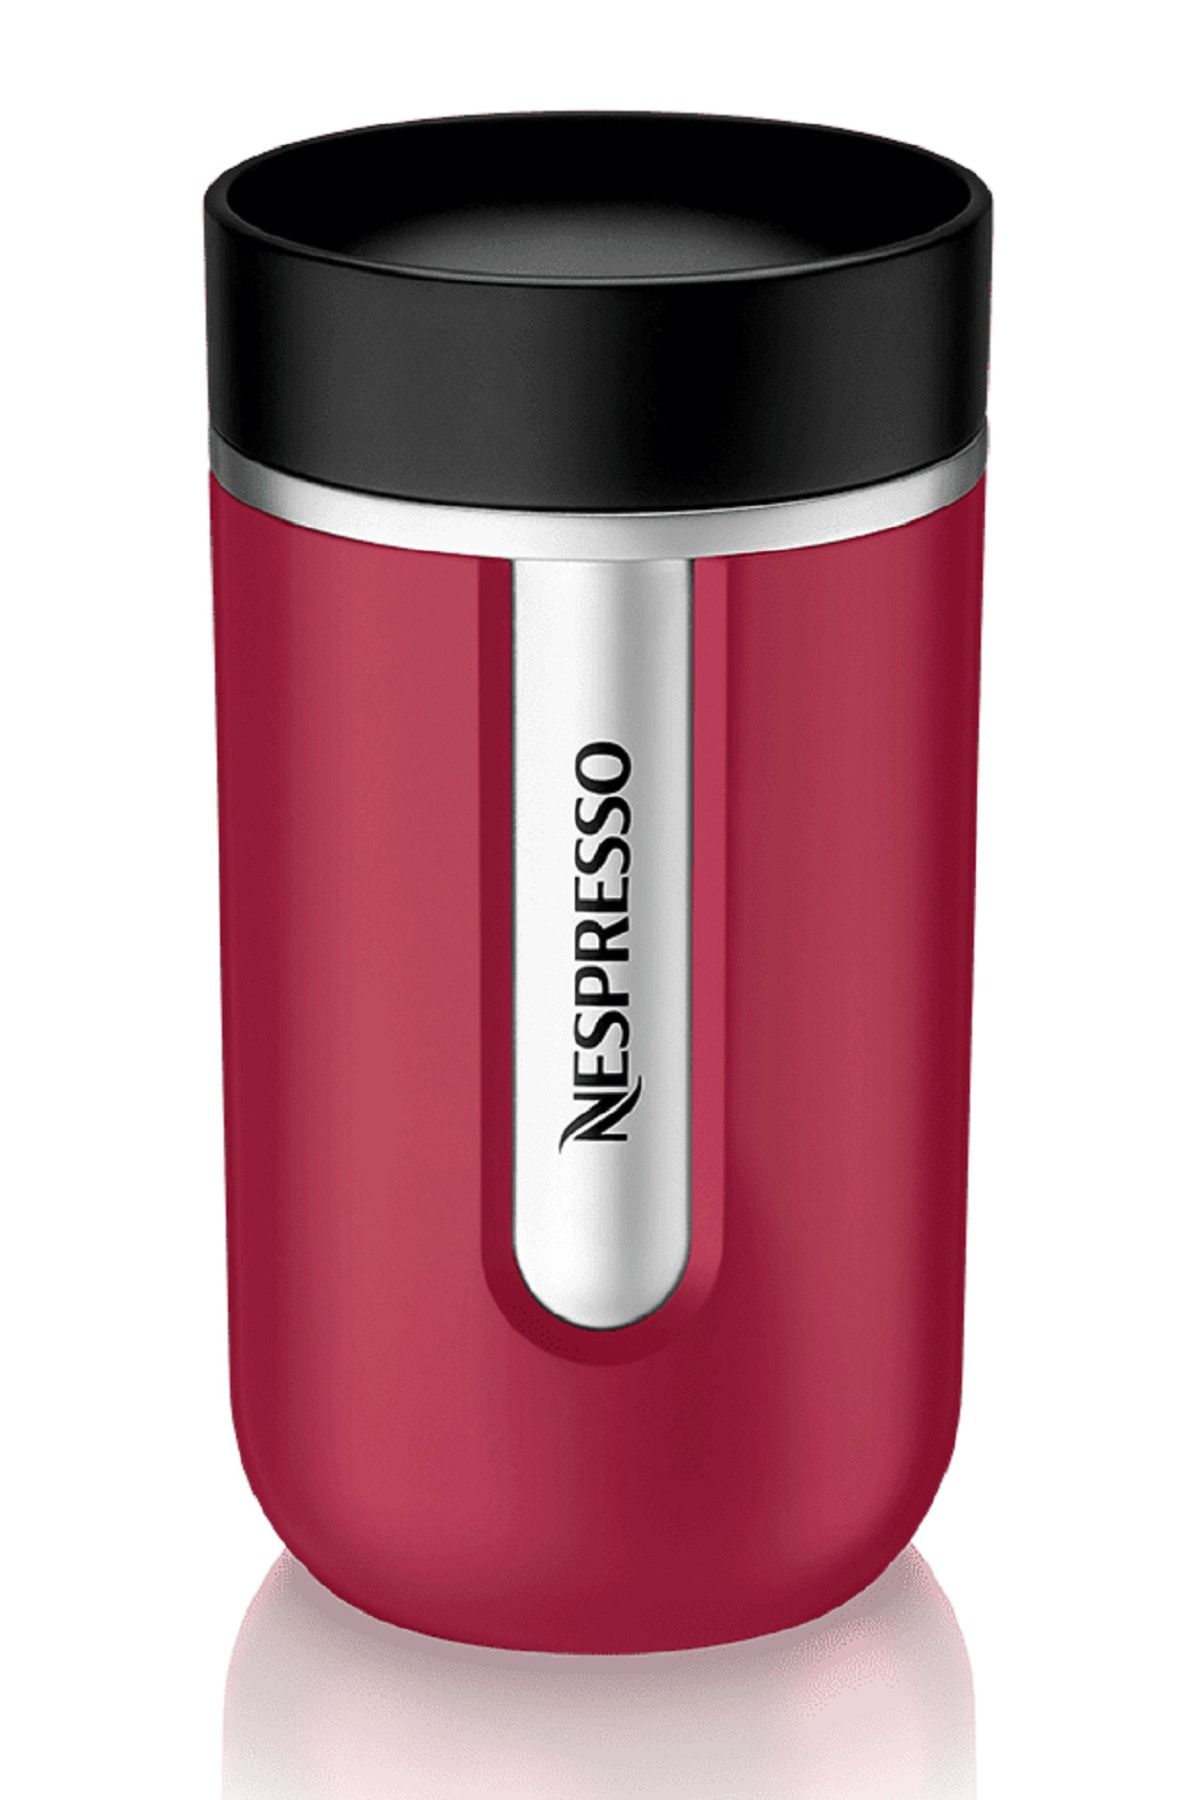 Nespresso NOMAD SMALL TRAVEL MUG RED RASPBERRY NEW 10oz Capacity NRFB!